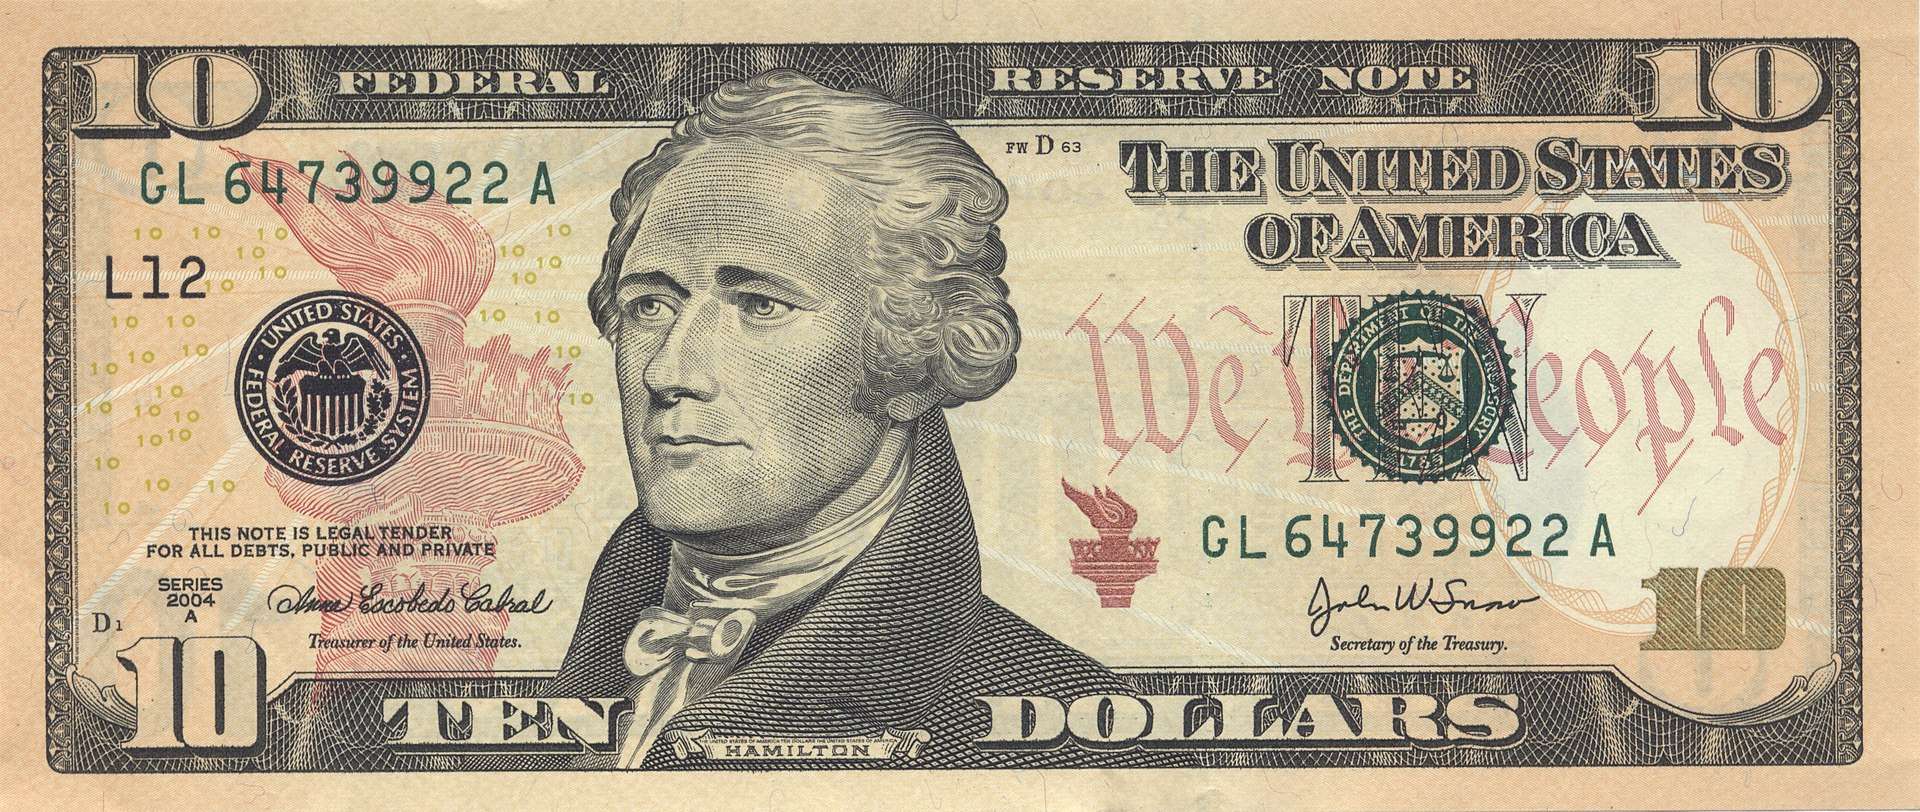 Alexander Hamilton on the Series 2004A U.S. $10 bill